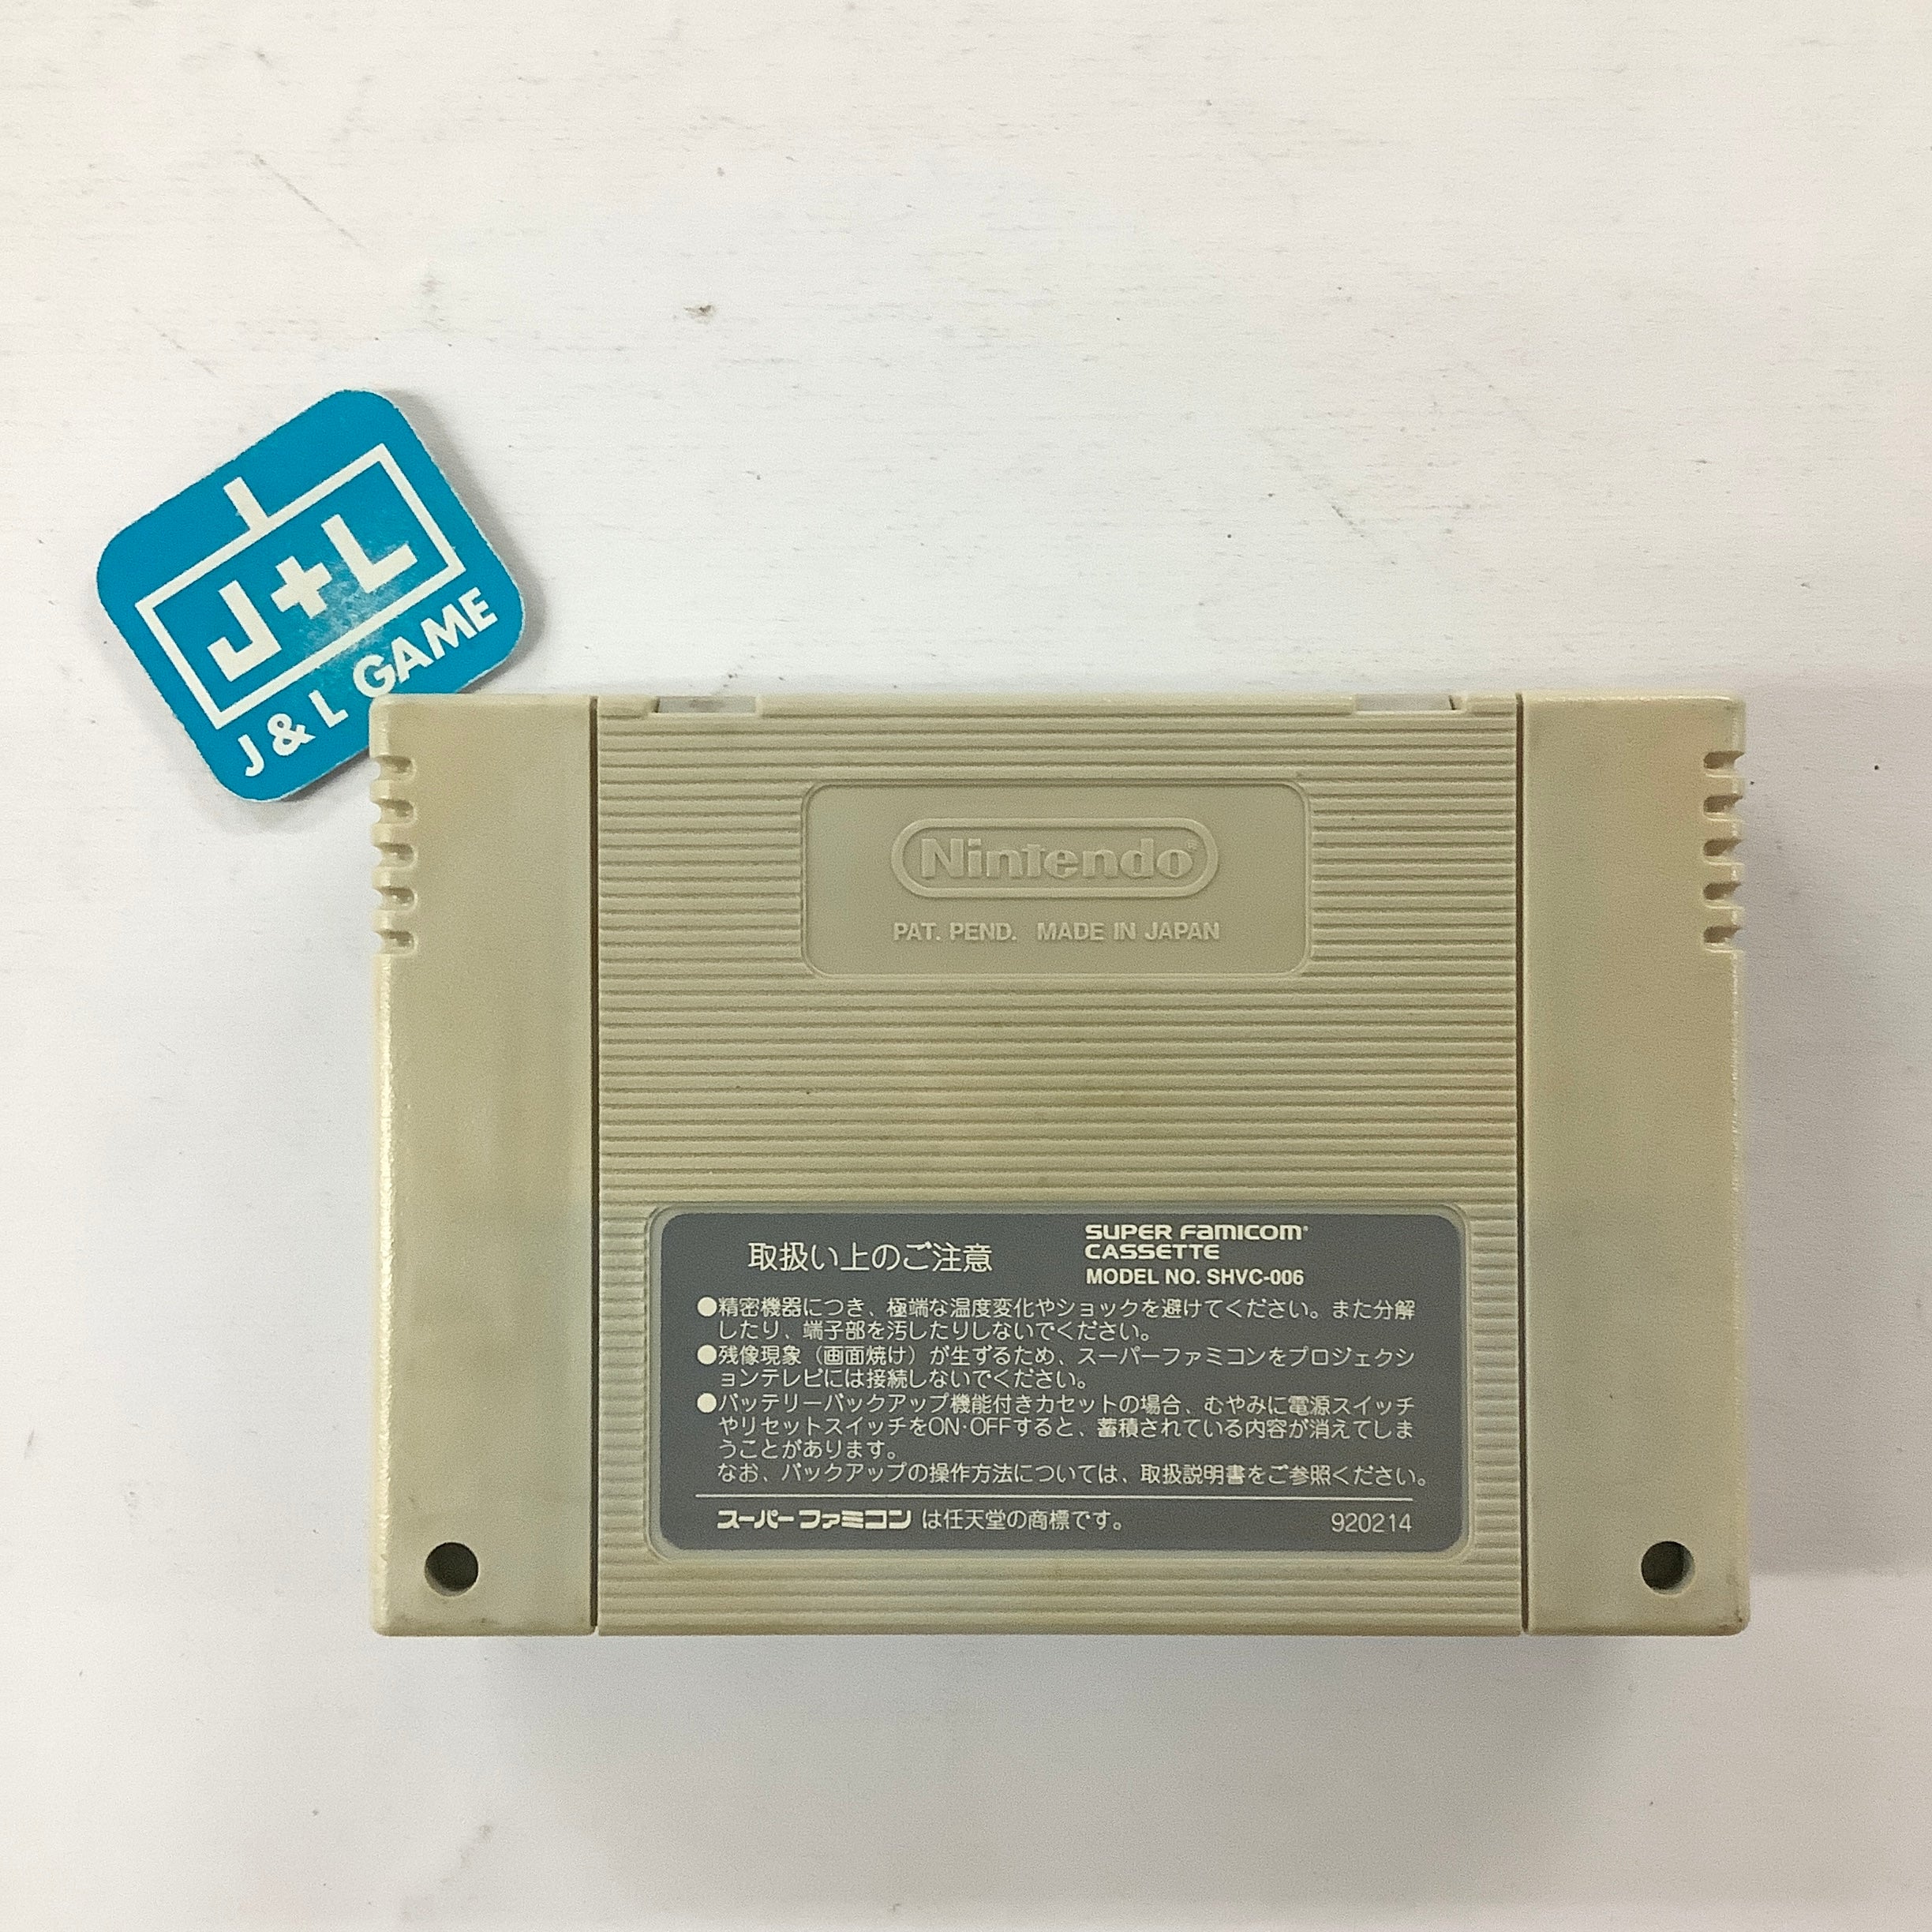 Super Nichibutsu Mahjong - (SFC) Super Famicom [Pre-Owned] (Japanese Import) Video Games Nichibutsu   